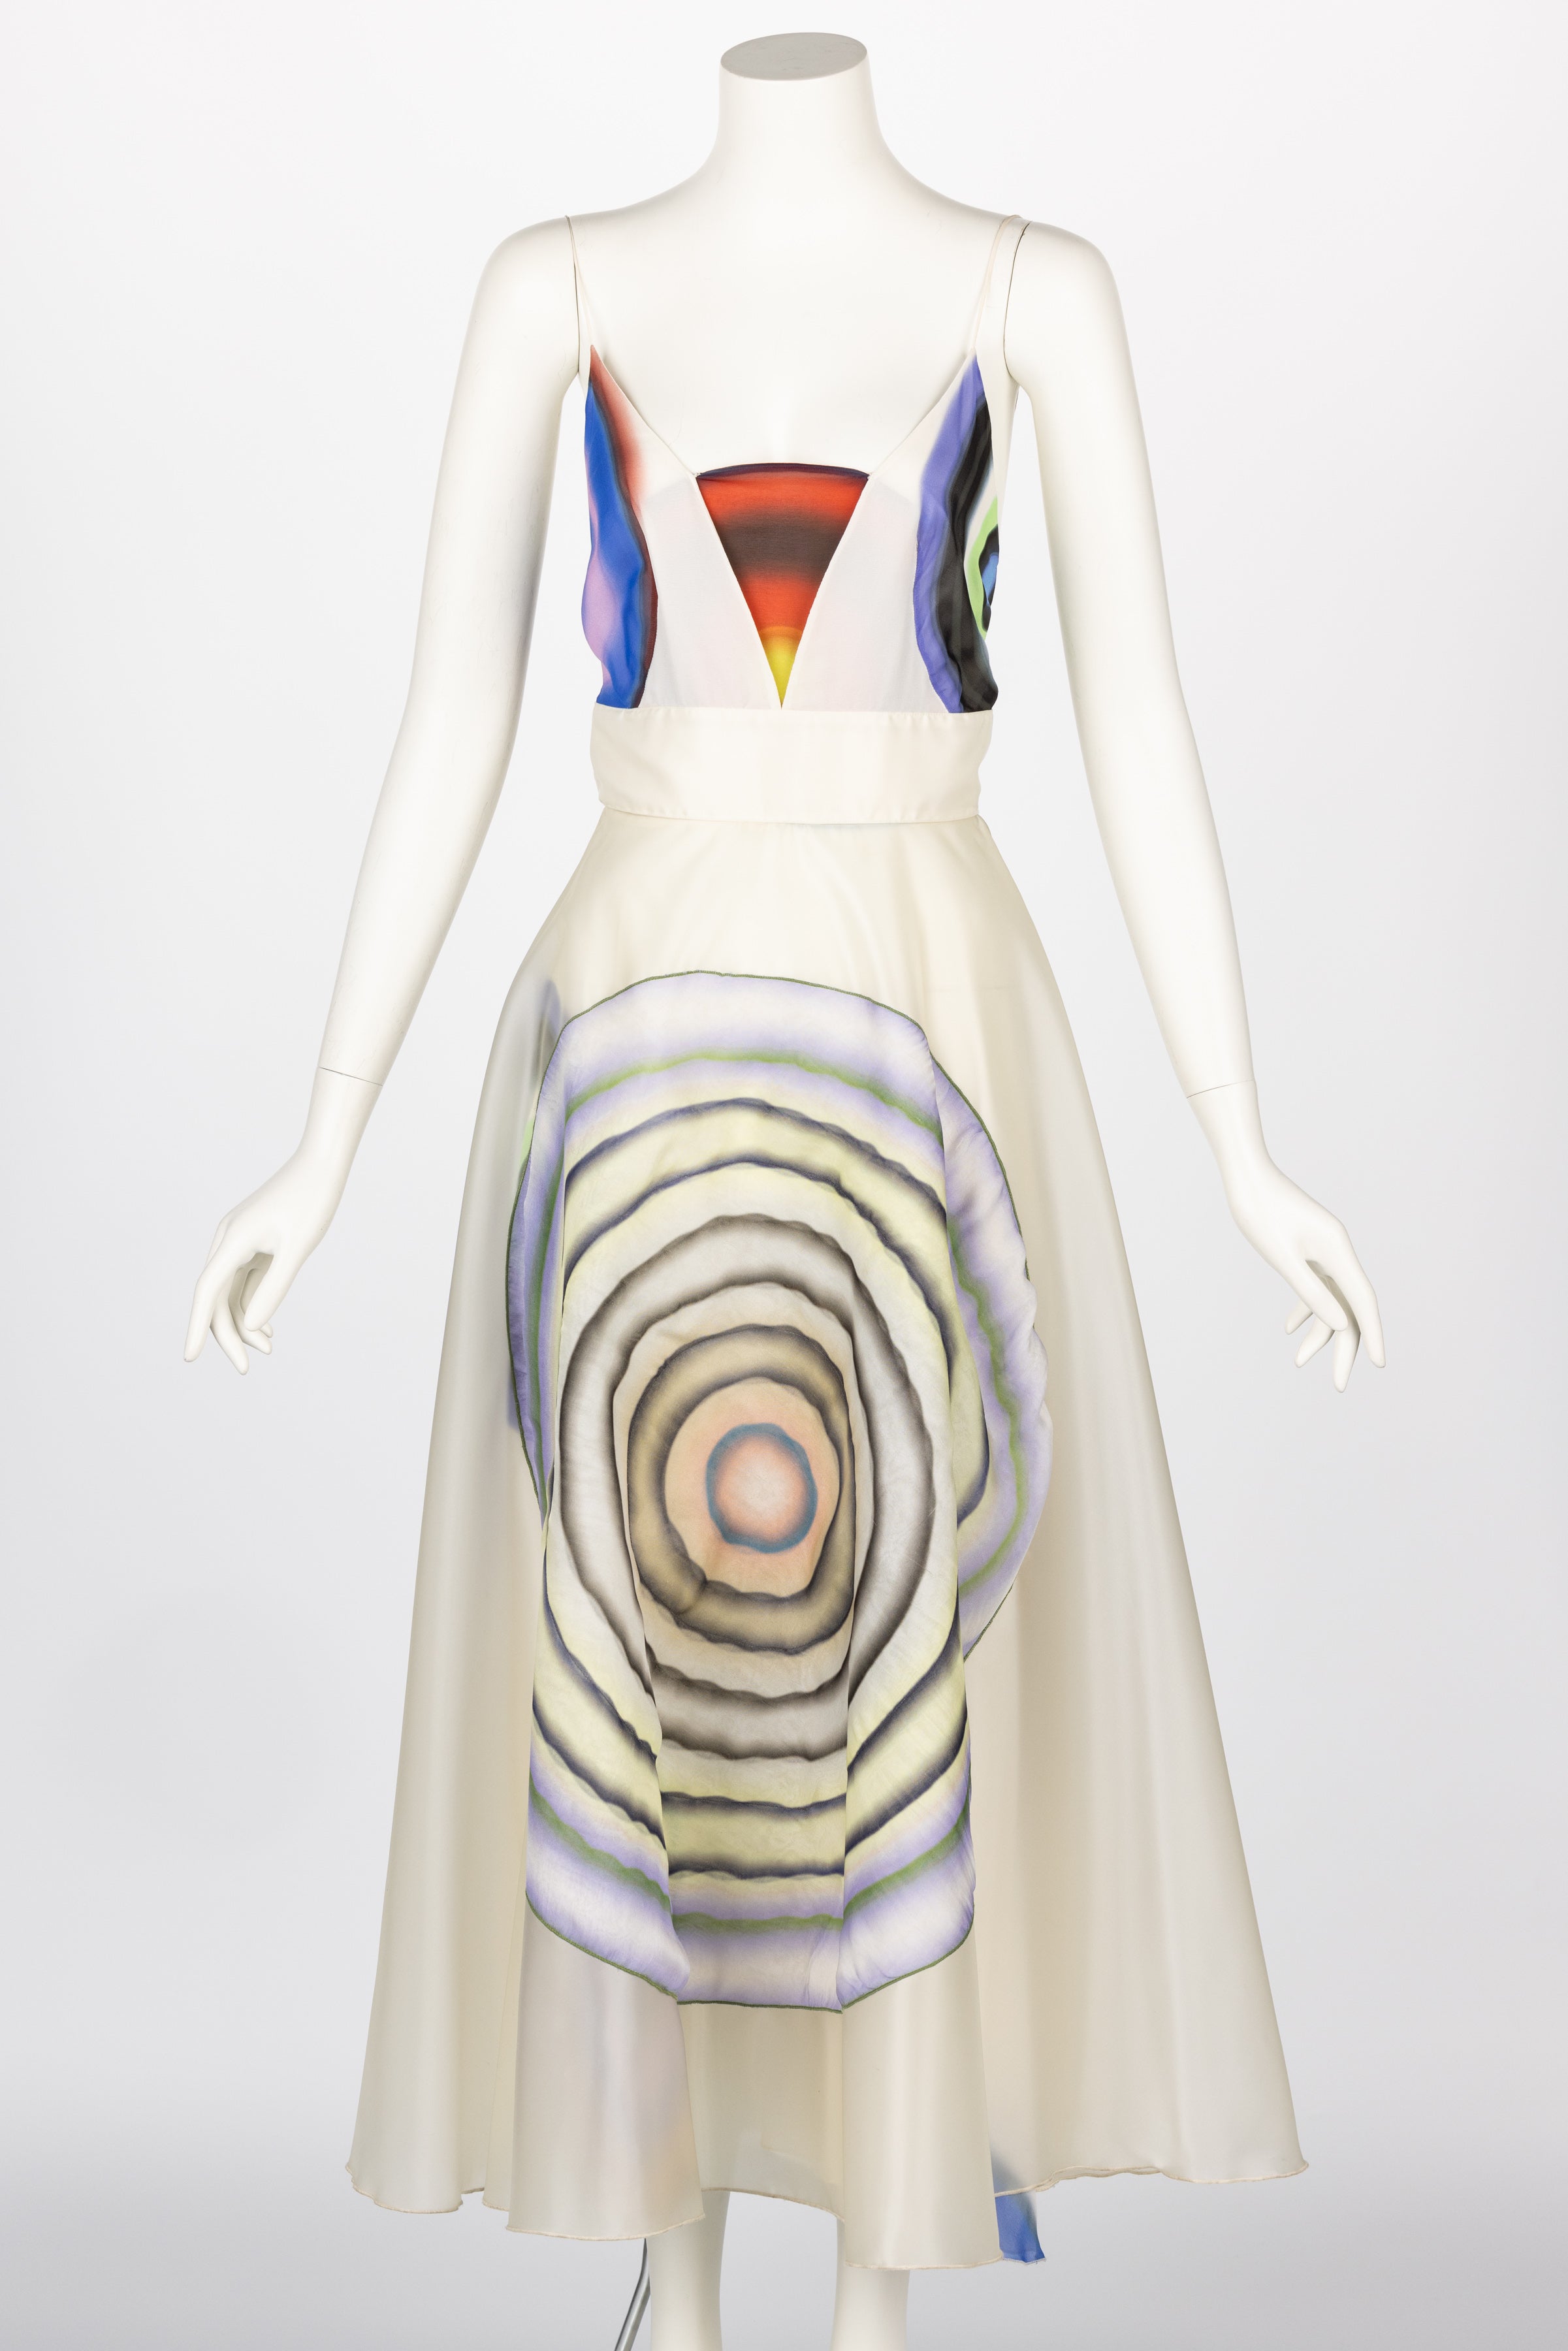 Fendi Karl Lagerfeld Silk Print Dress S/S 2008 Runway In New Condition For Sale In Boca Raton, FL